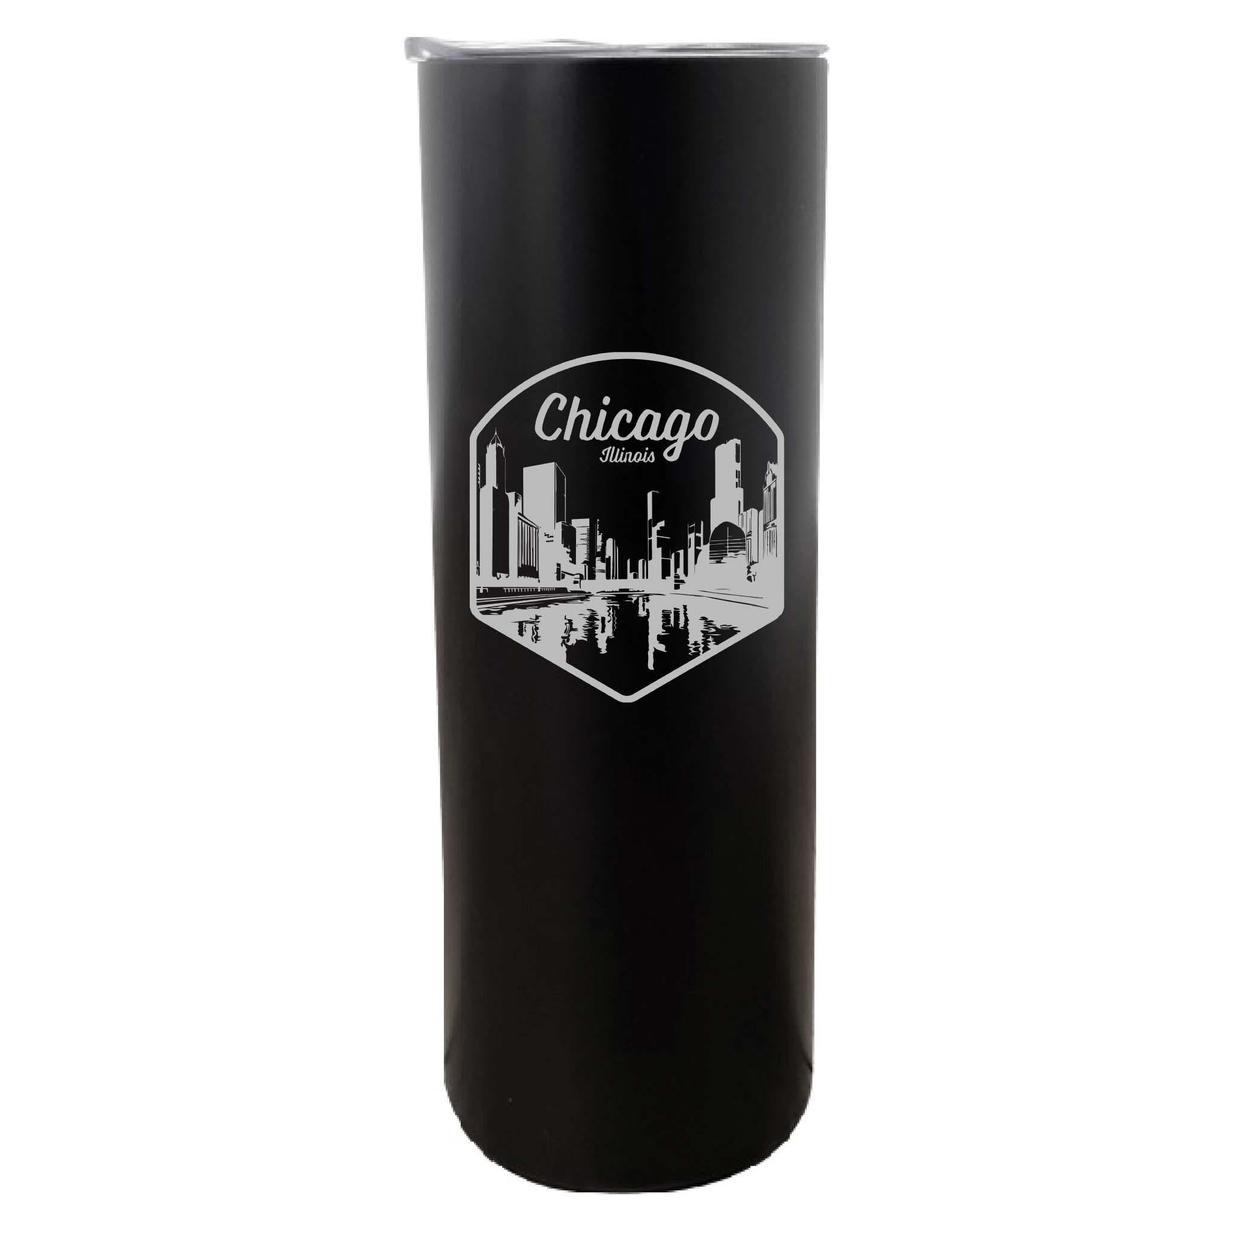 Chicago Illinois Souvenir 20 Oz Engraved Insulated Skinny Tumbler - Black,,4-Pack